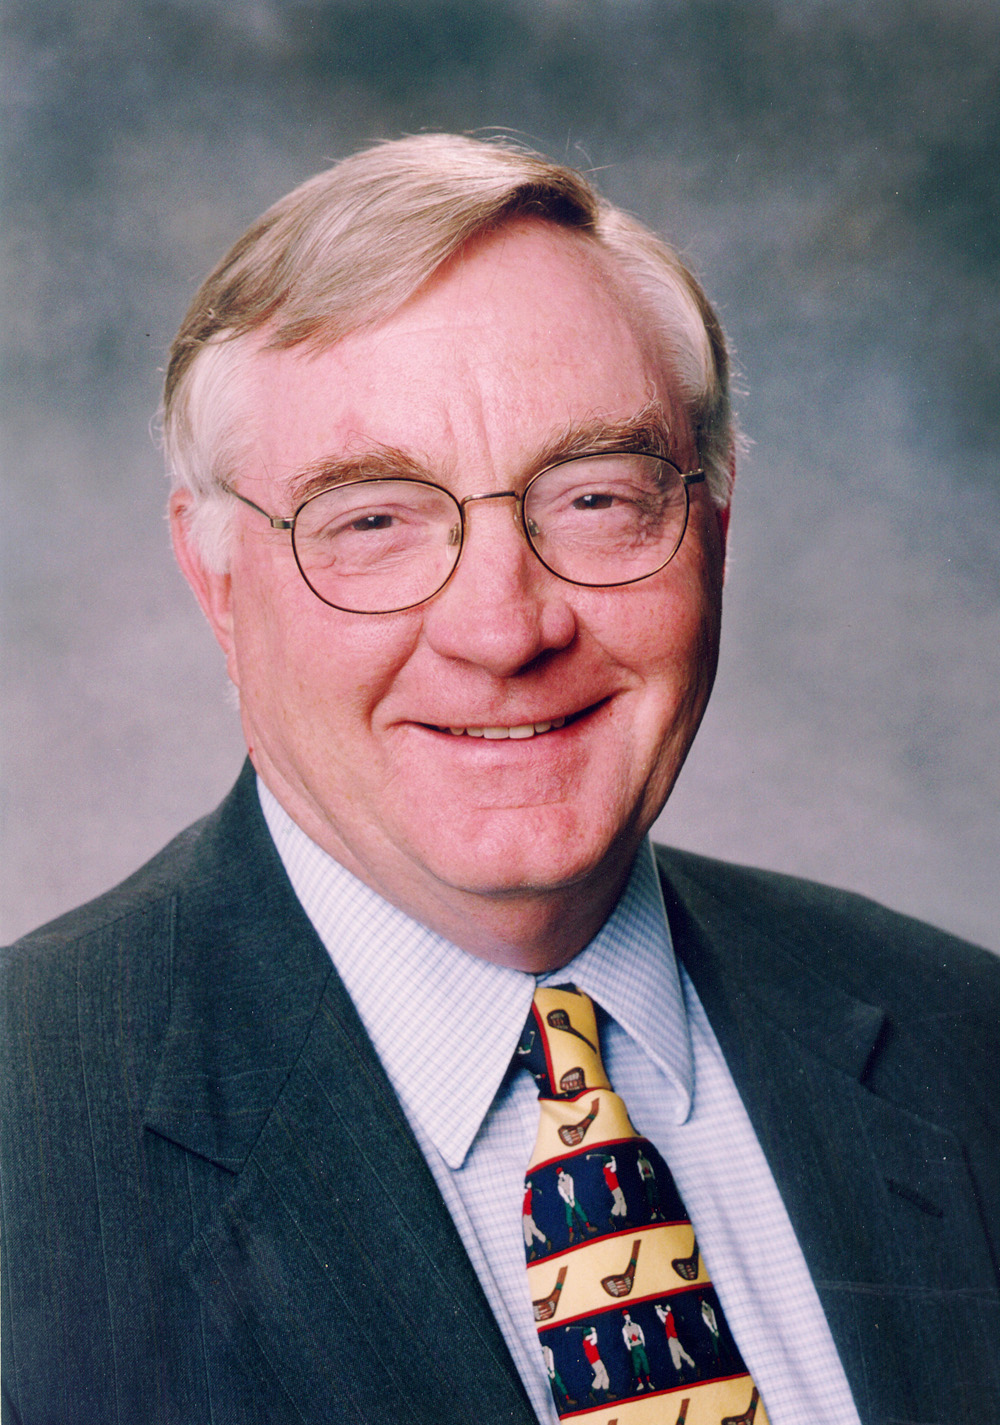 Photograph of Virginia Tech 2011 William H. Ruffner Medal recipient John W. Bates III.